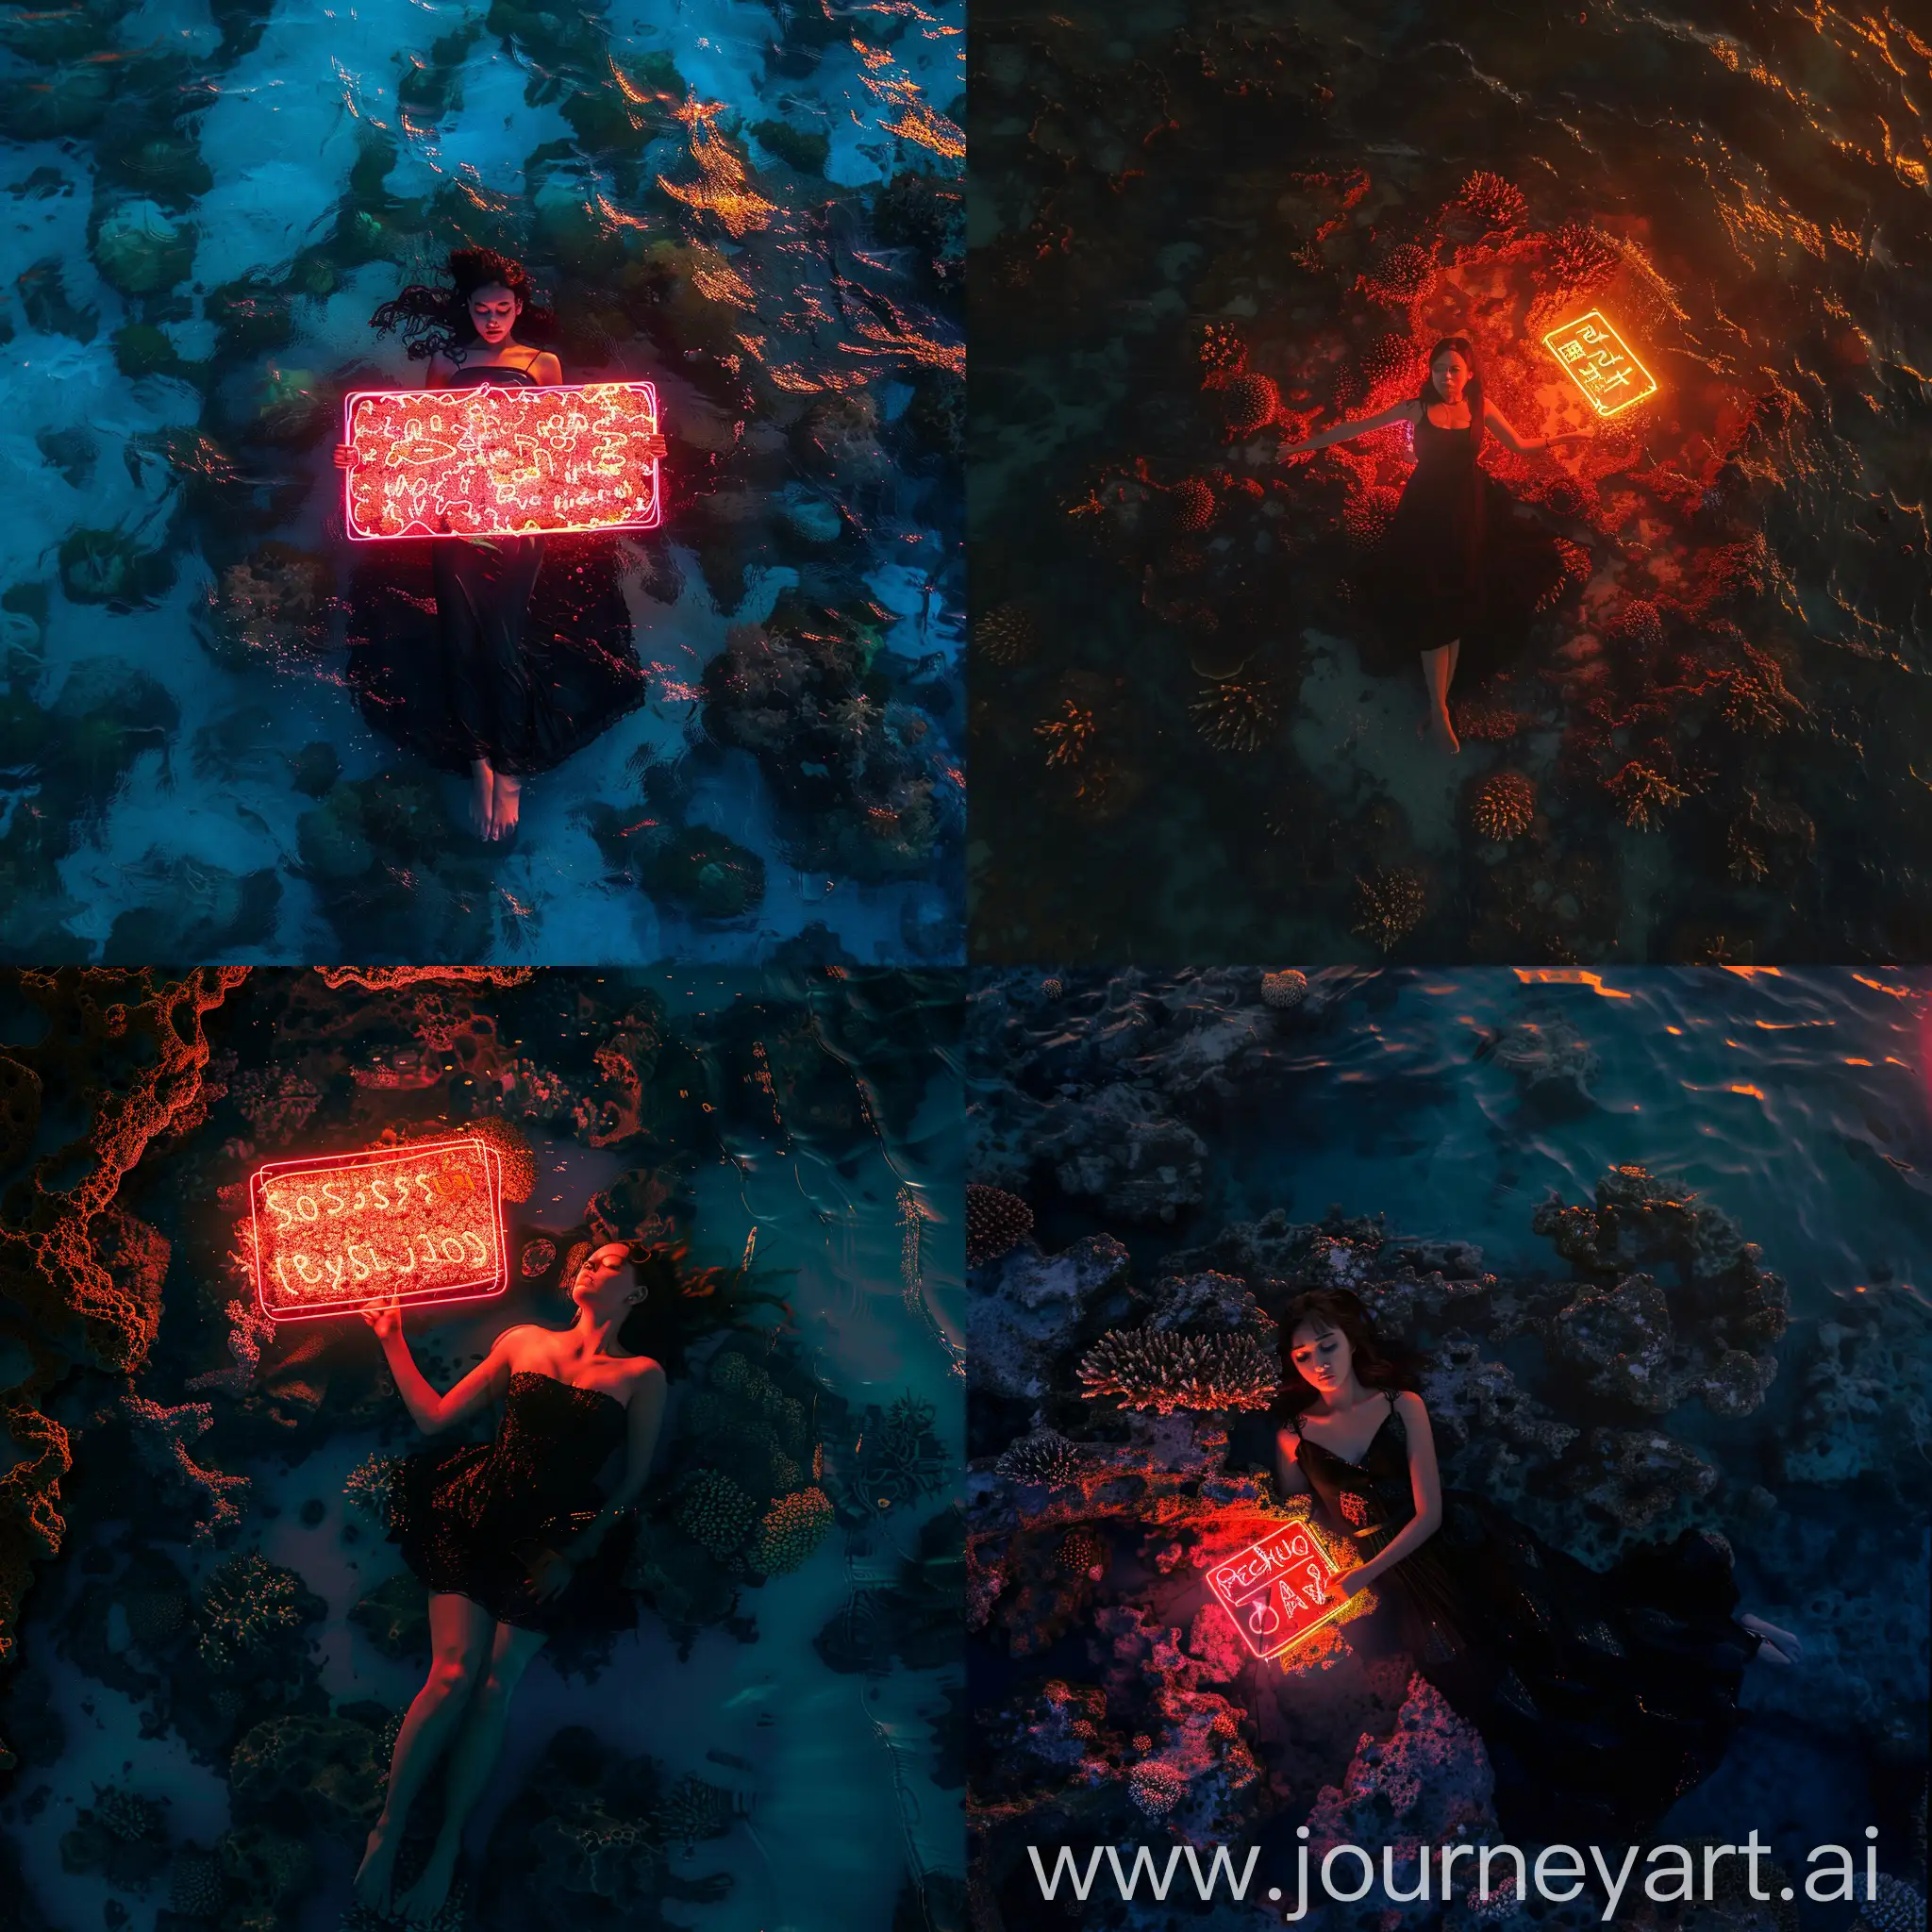 Sunset, ocean, bird's-eye view, coral reef, dark atmosphere, girl in black dress, holding neon sign, lying in sea, water reflection.